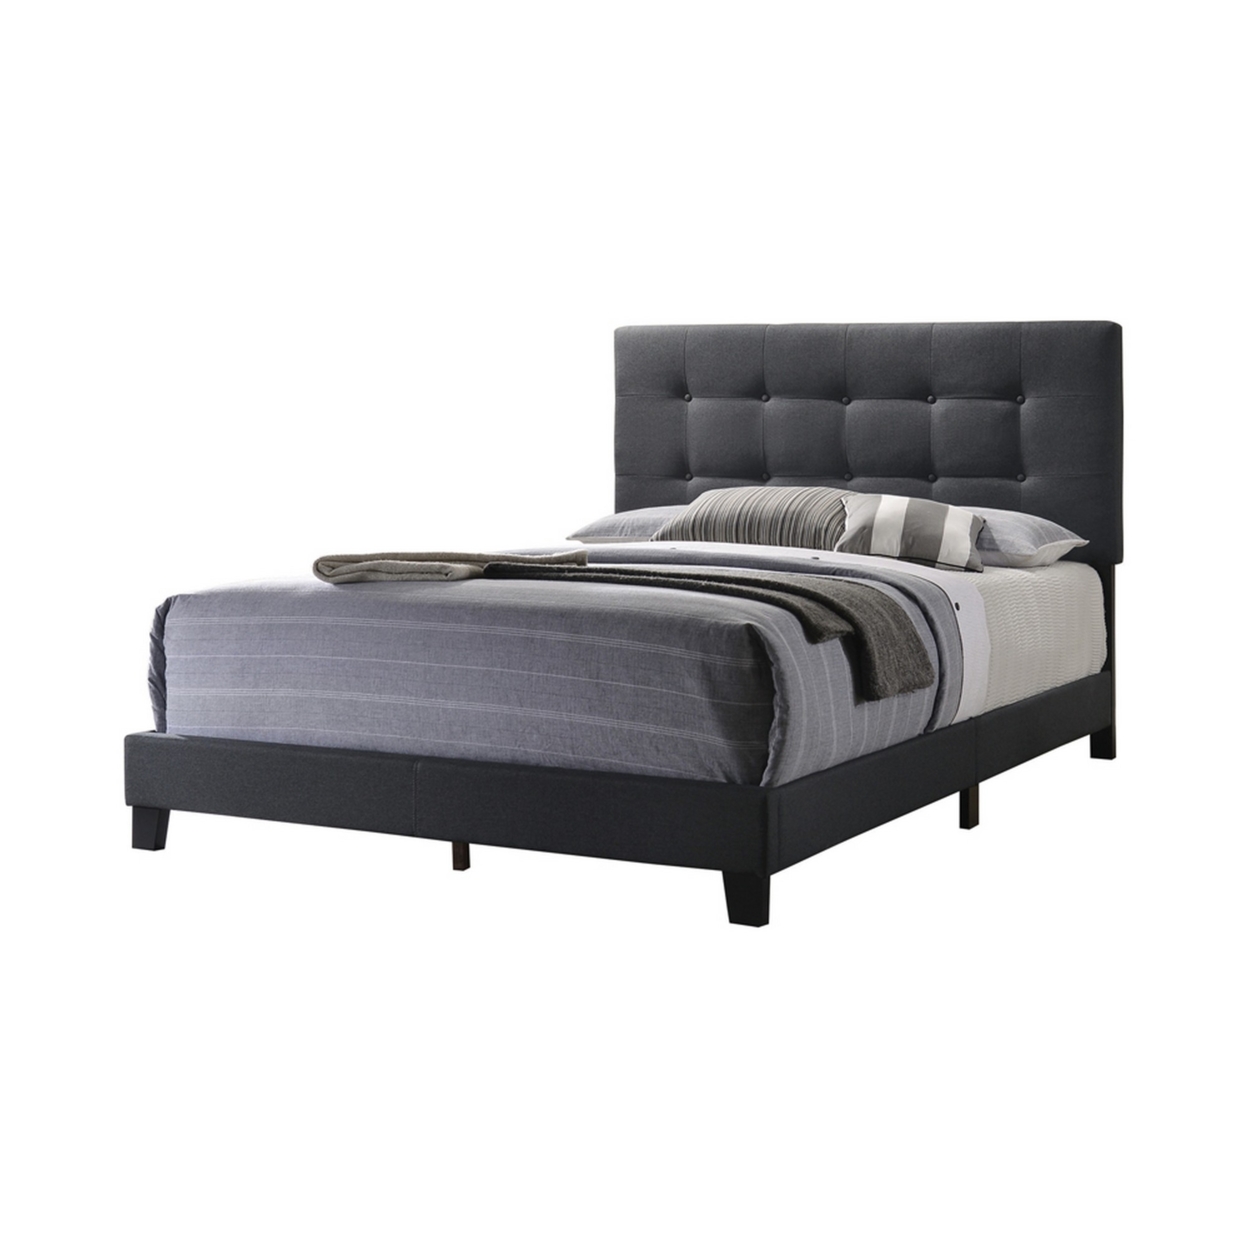 Queen Size Bed With Square Button Tufted Headboard, Dark Gray- Saltoro Sherpi